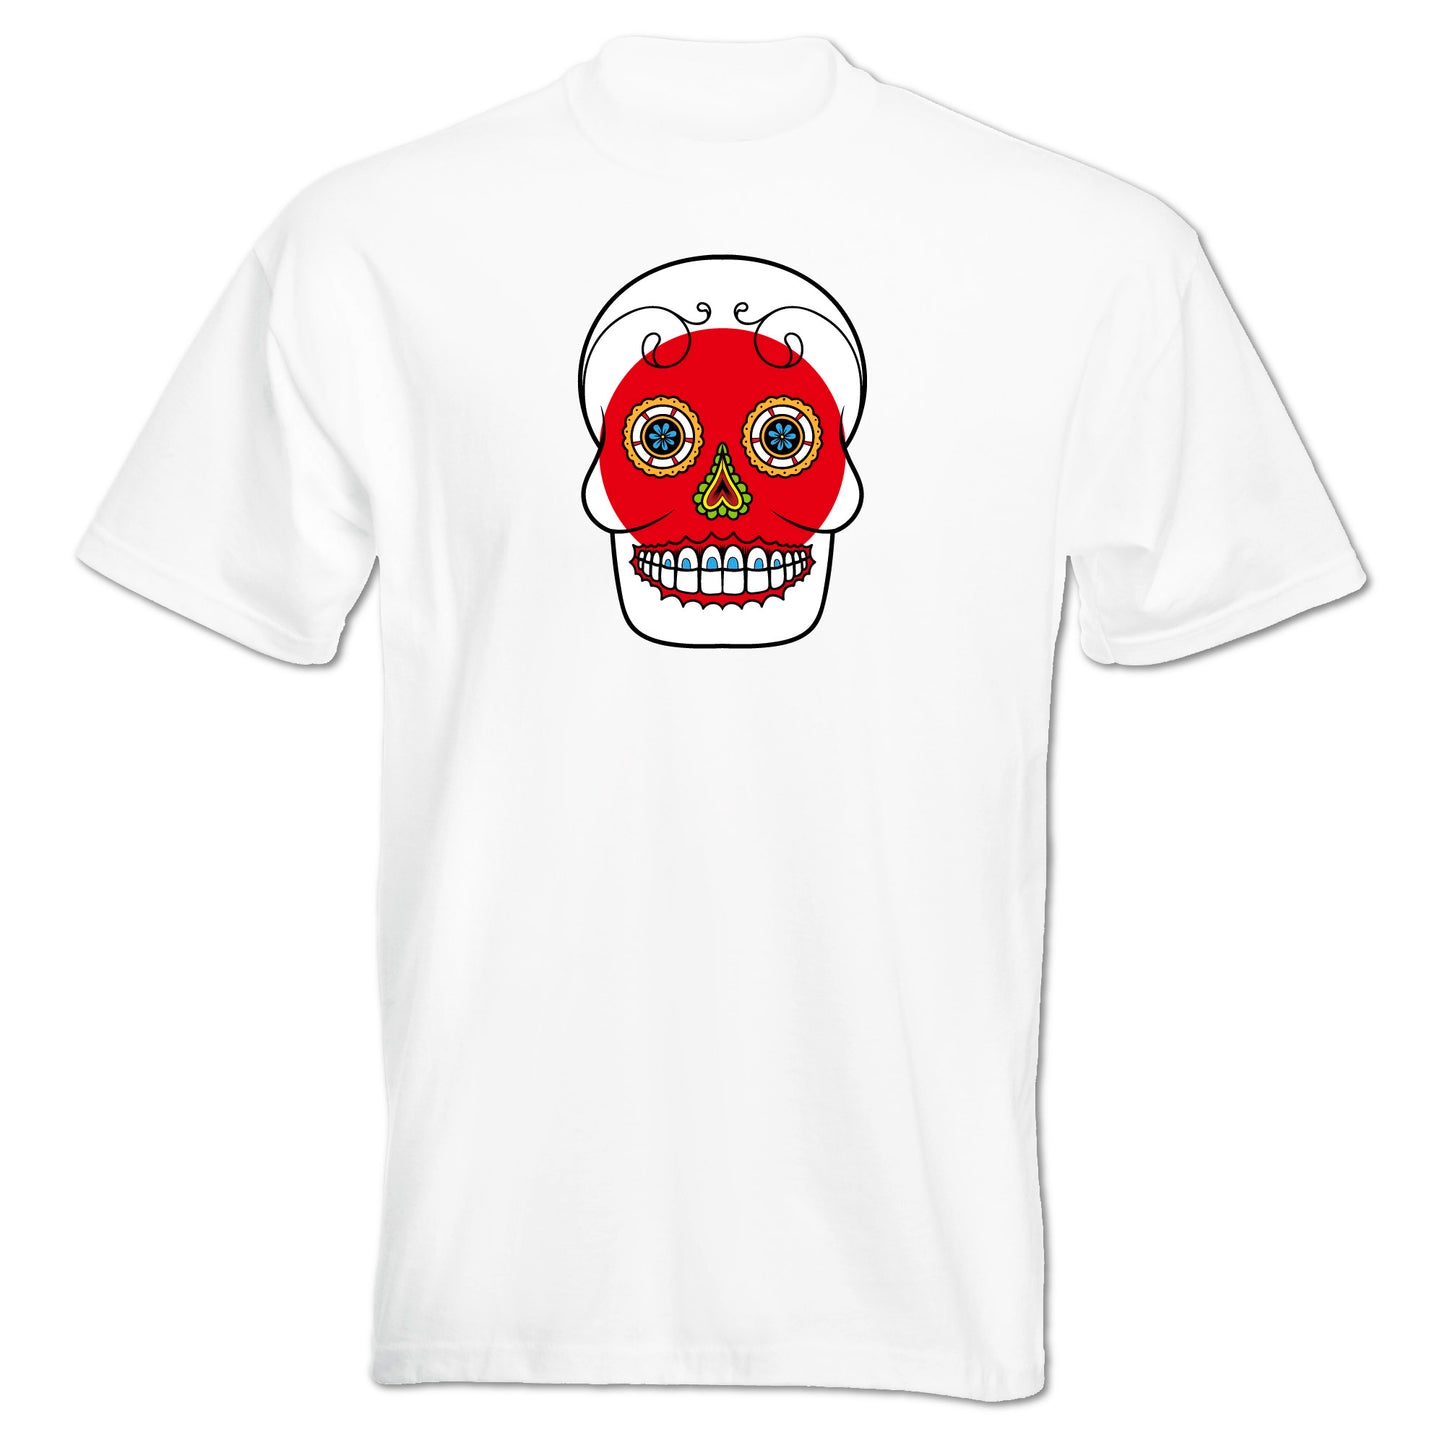 INDIGOS UG - T-Shirt Herren - Japan - Skull - Fussball